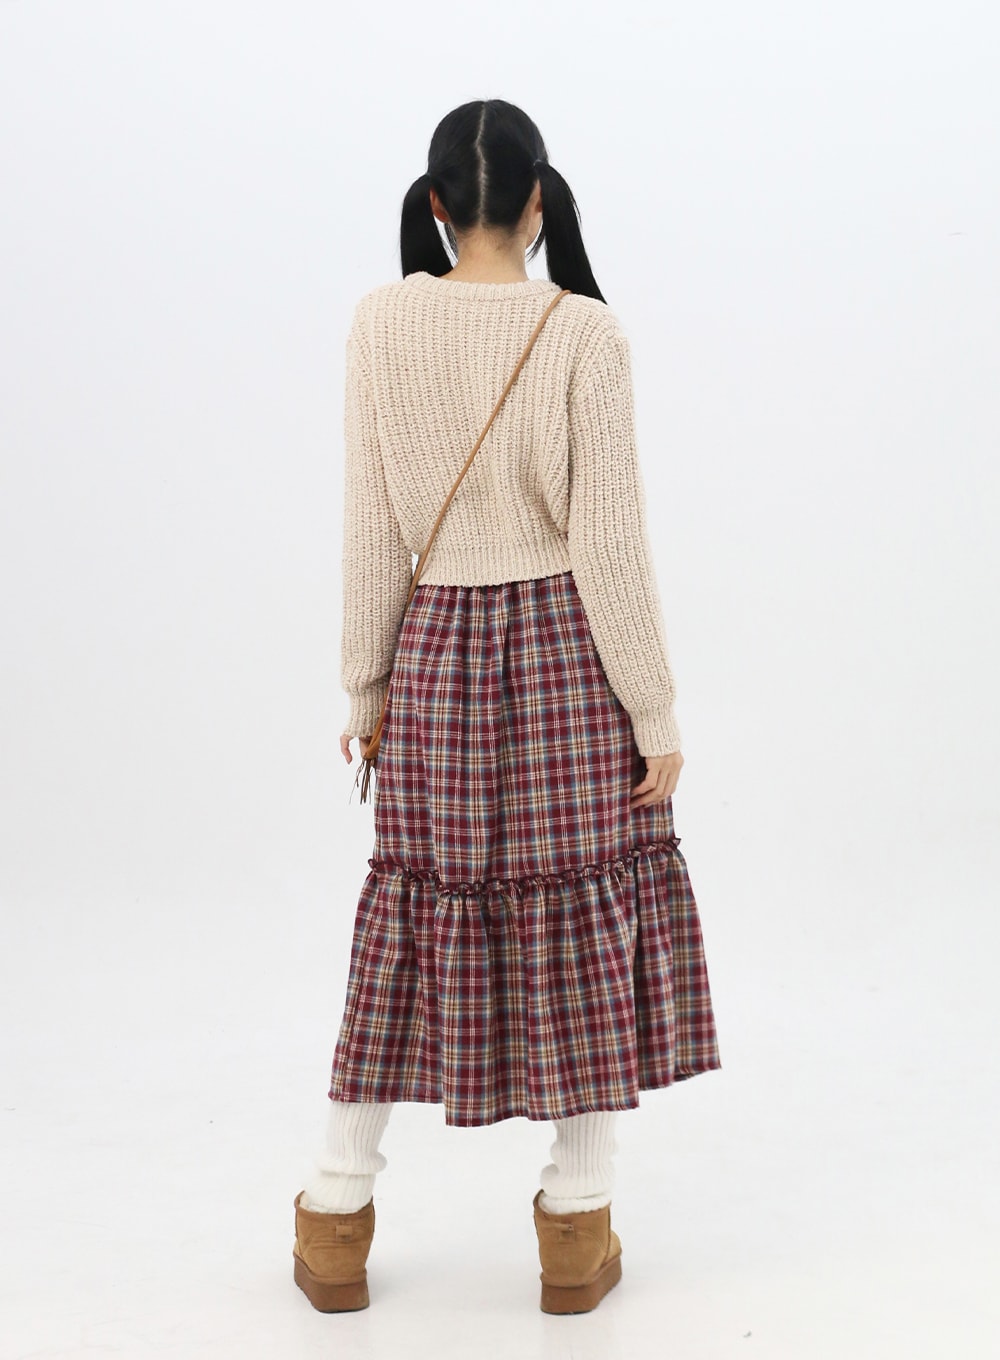 Plaid Maxi Skirt